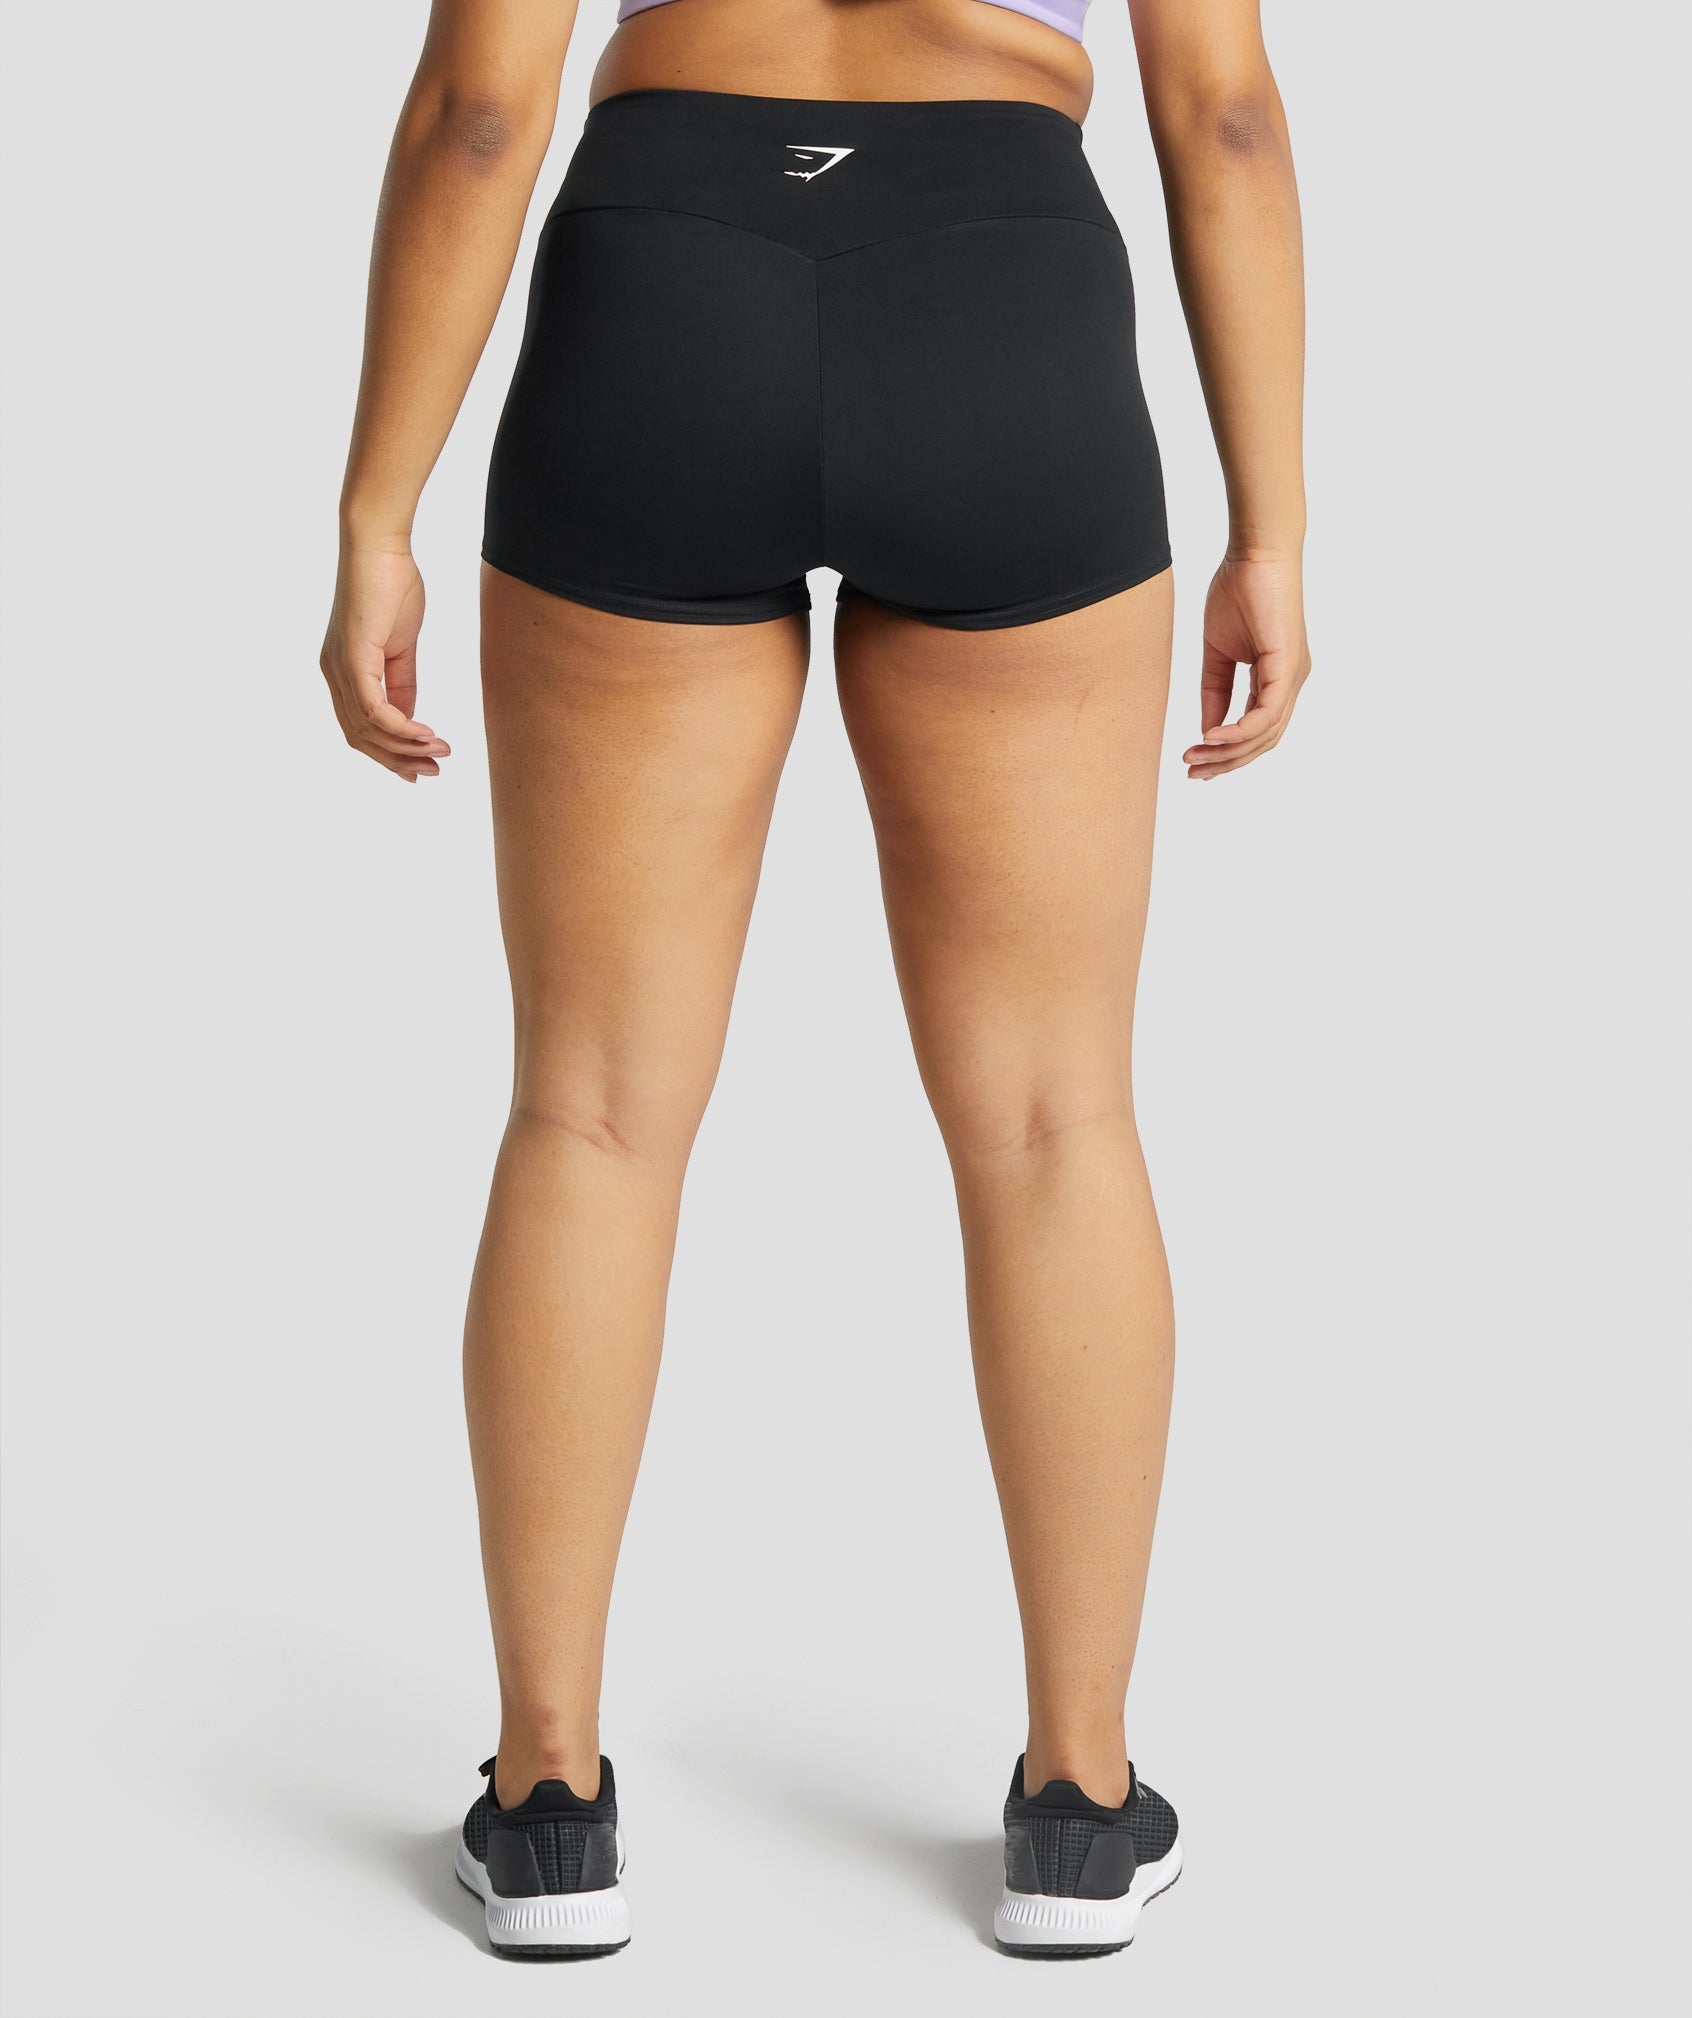 GYMSHARK Womens Training Short Length Shorts, Black, X-Small